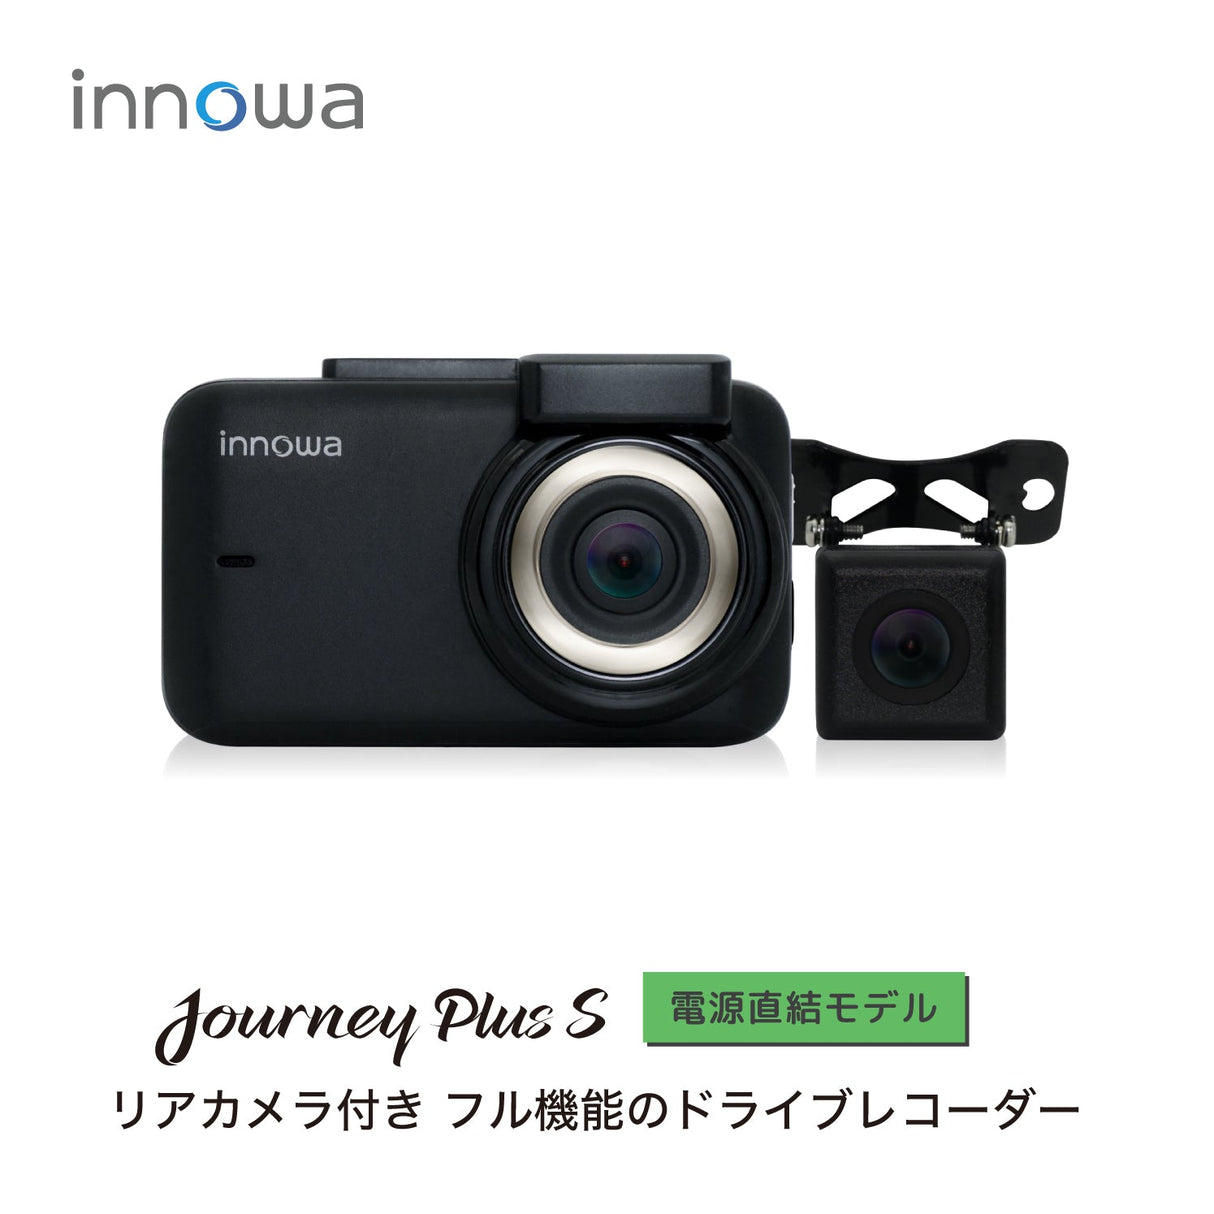 innowa Journey Plus S  次世代の無線LAN対応ドライブレコーダー(リアカメラ付) 電源直結タイプ 32GBSDカード付